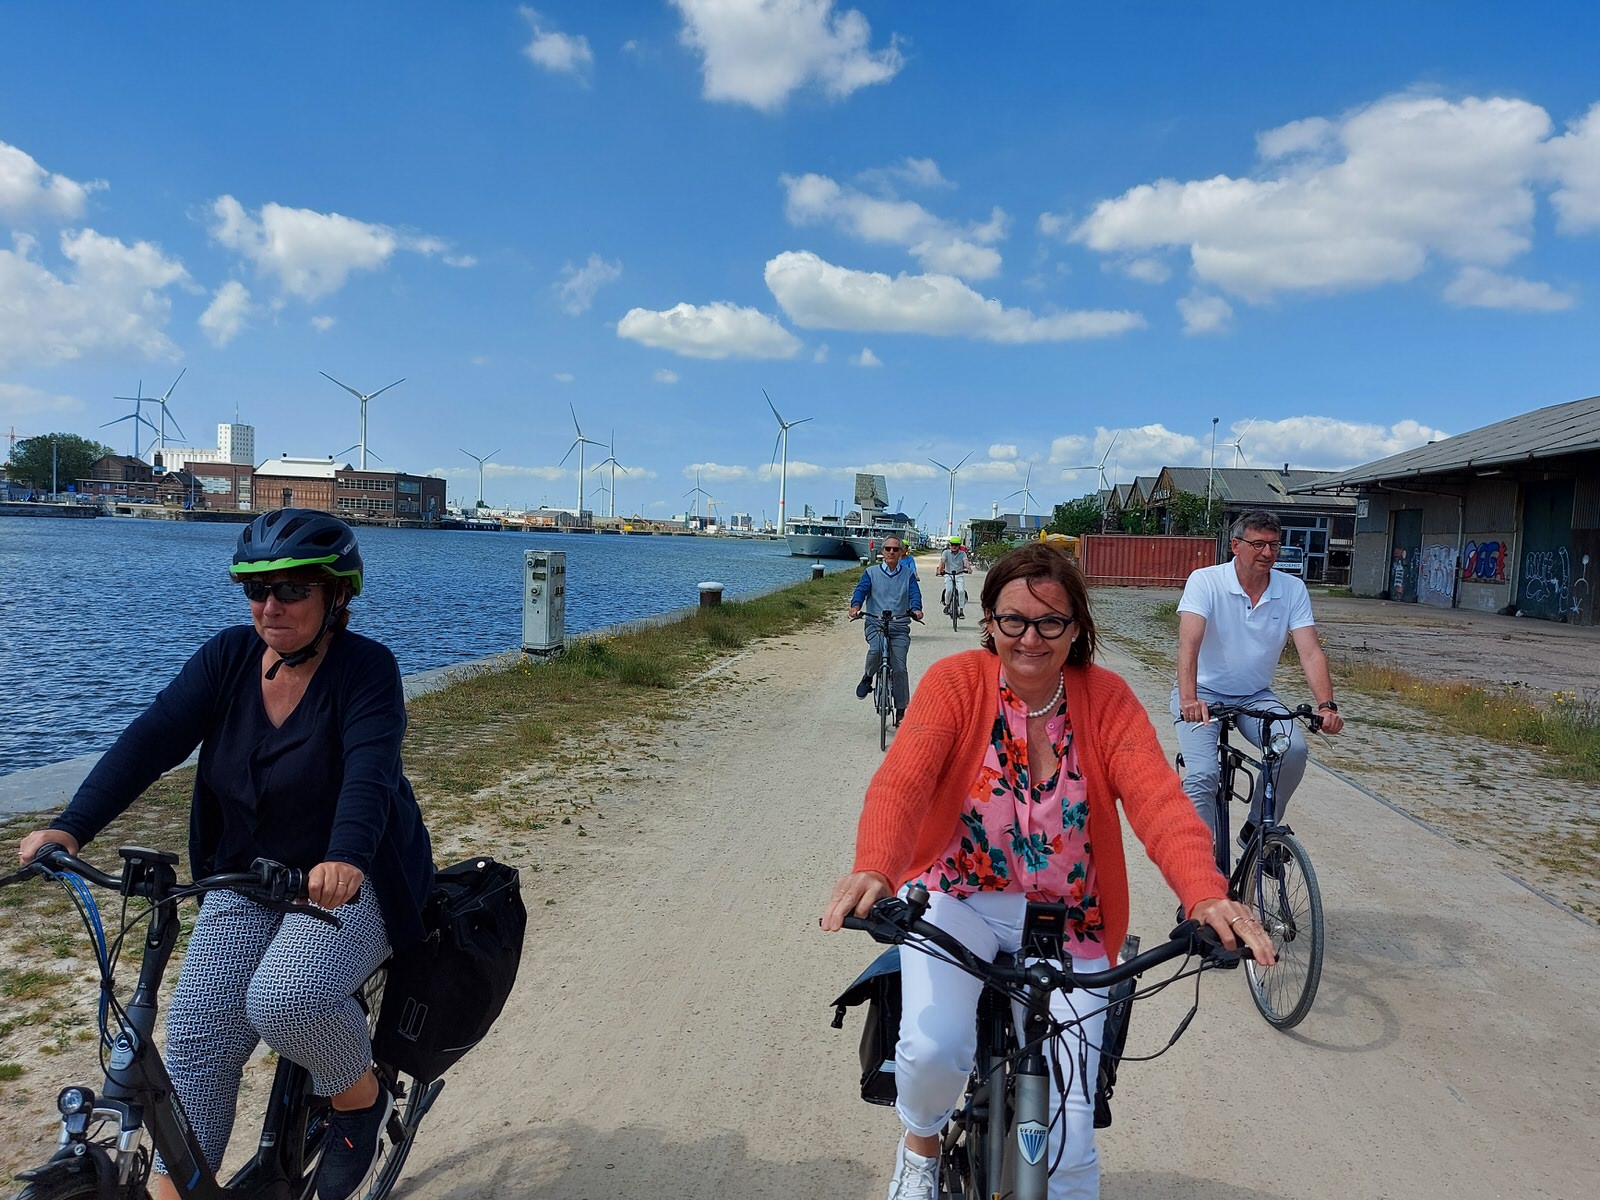 Bike tour: 800 years of the city of Antwerp